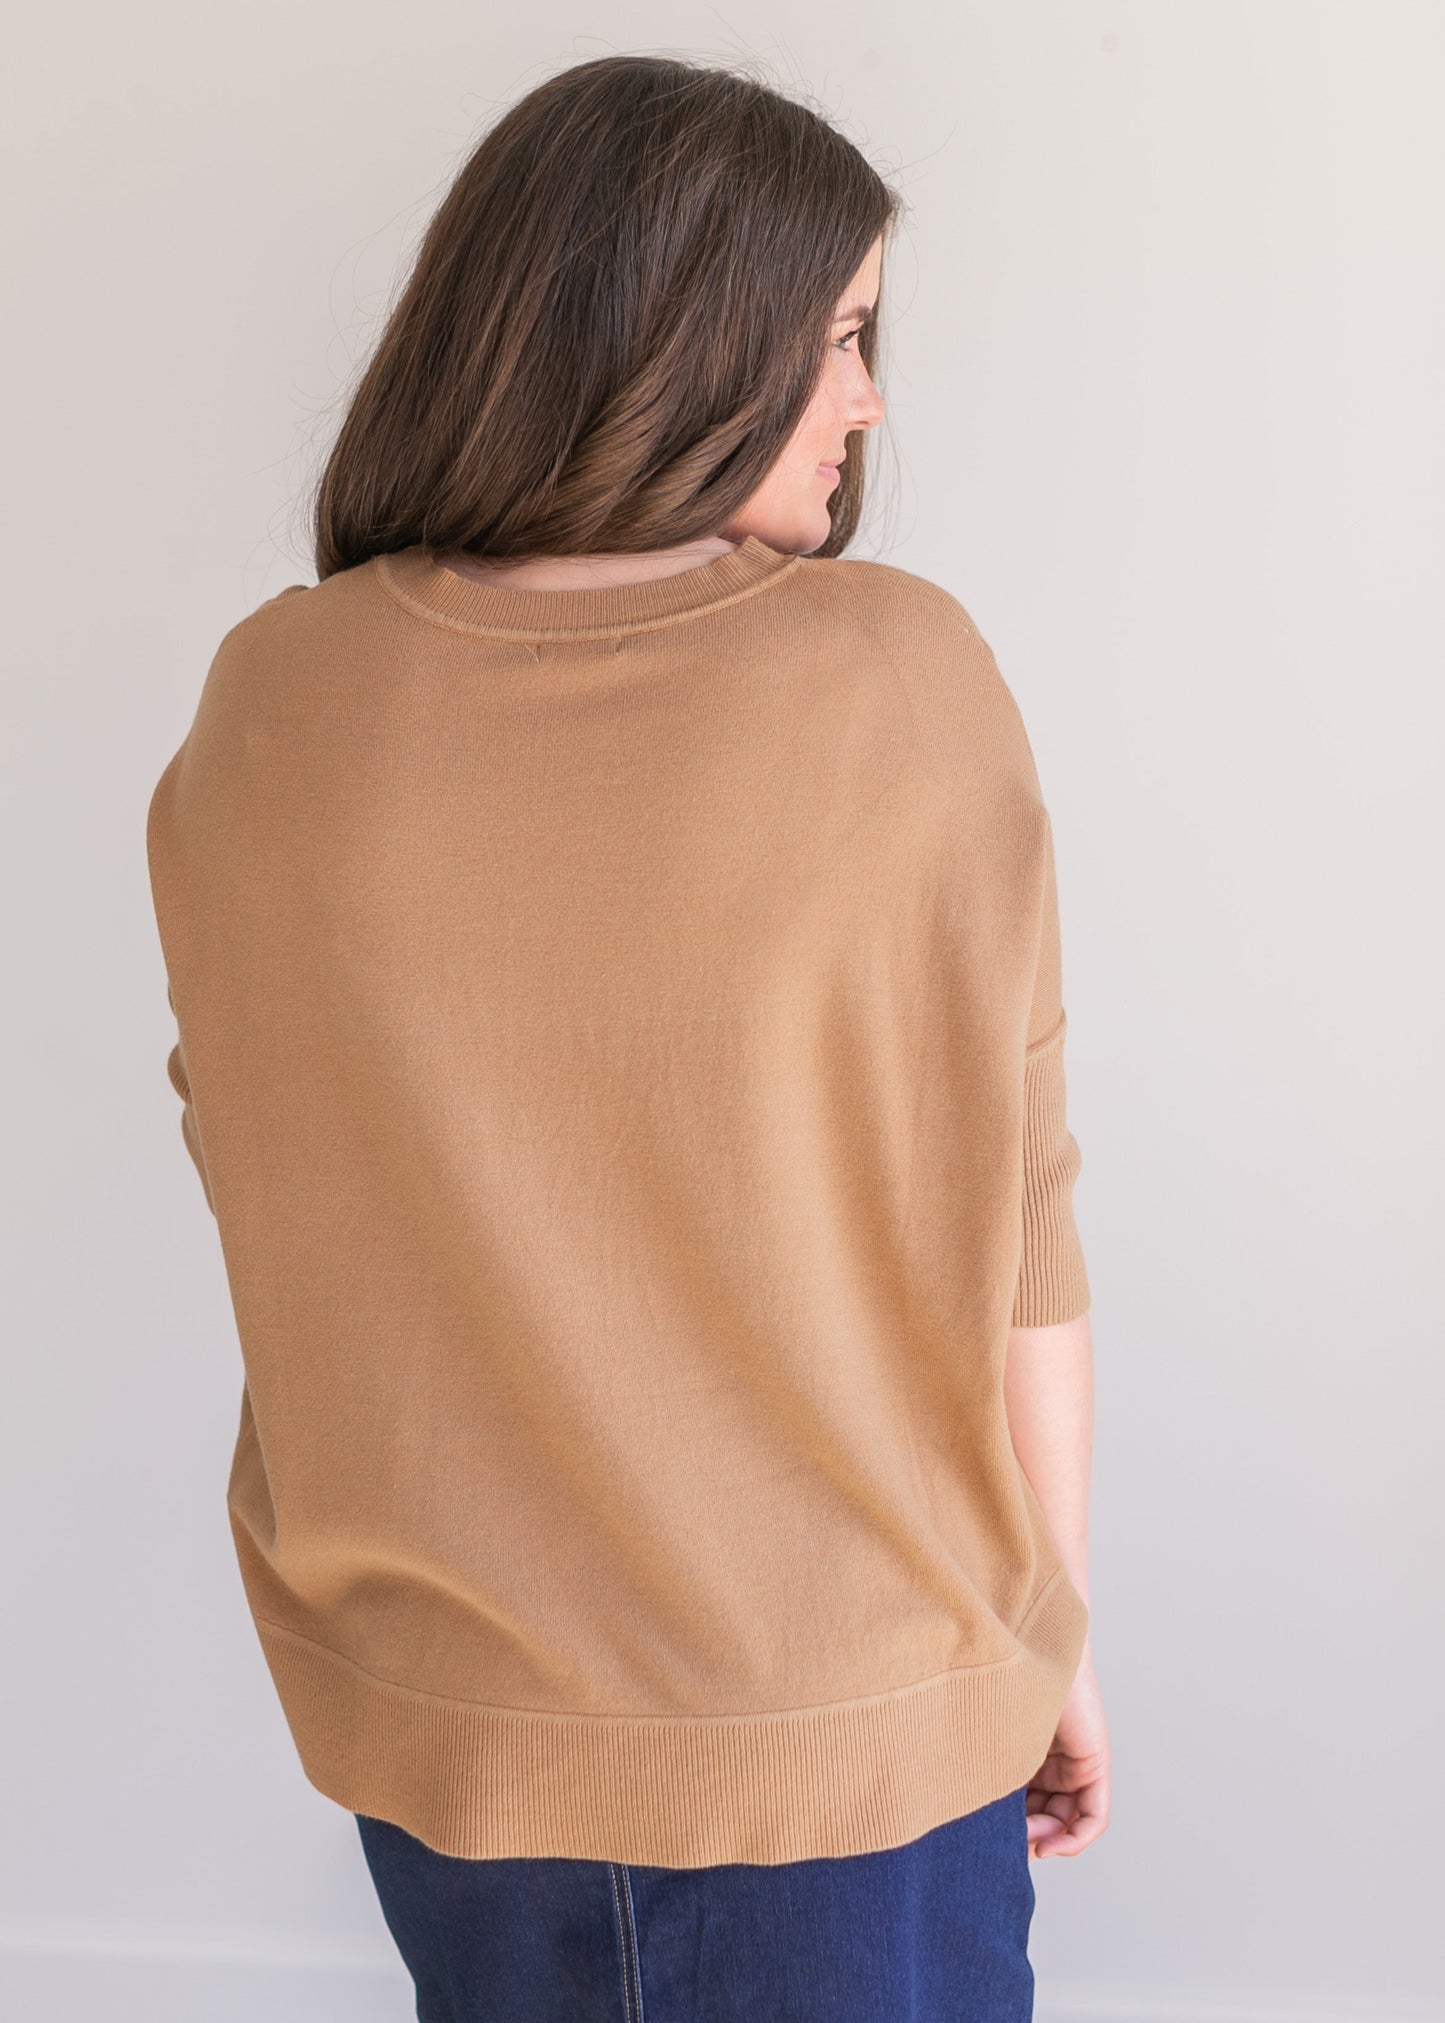 Soft Knit Half Sleeve Sweater Tops